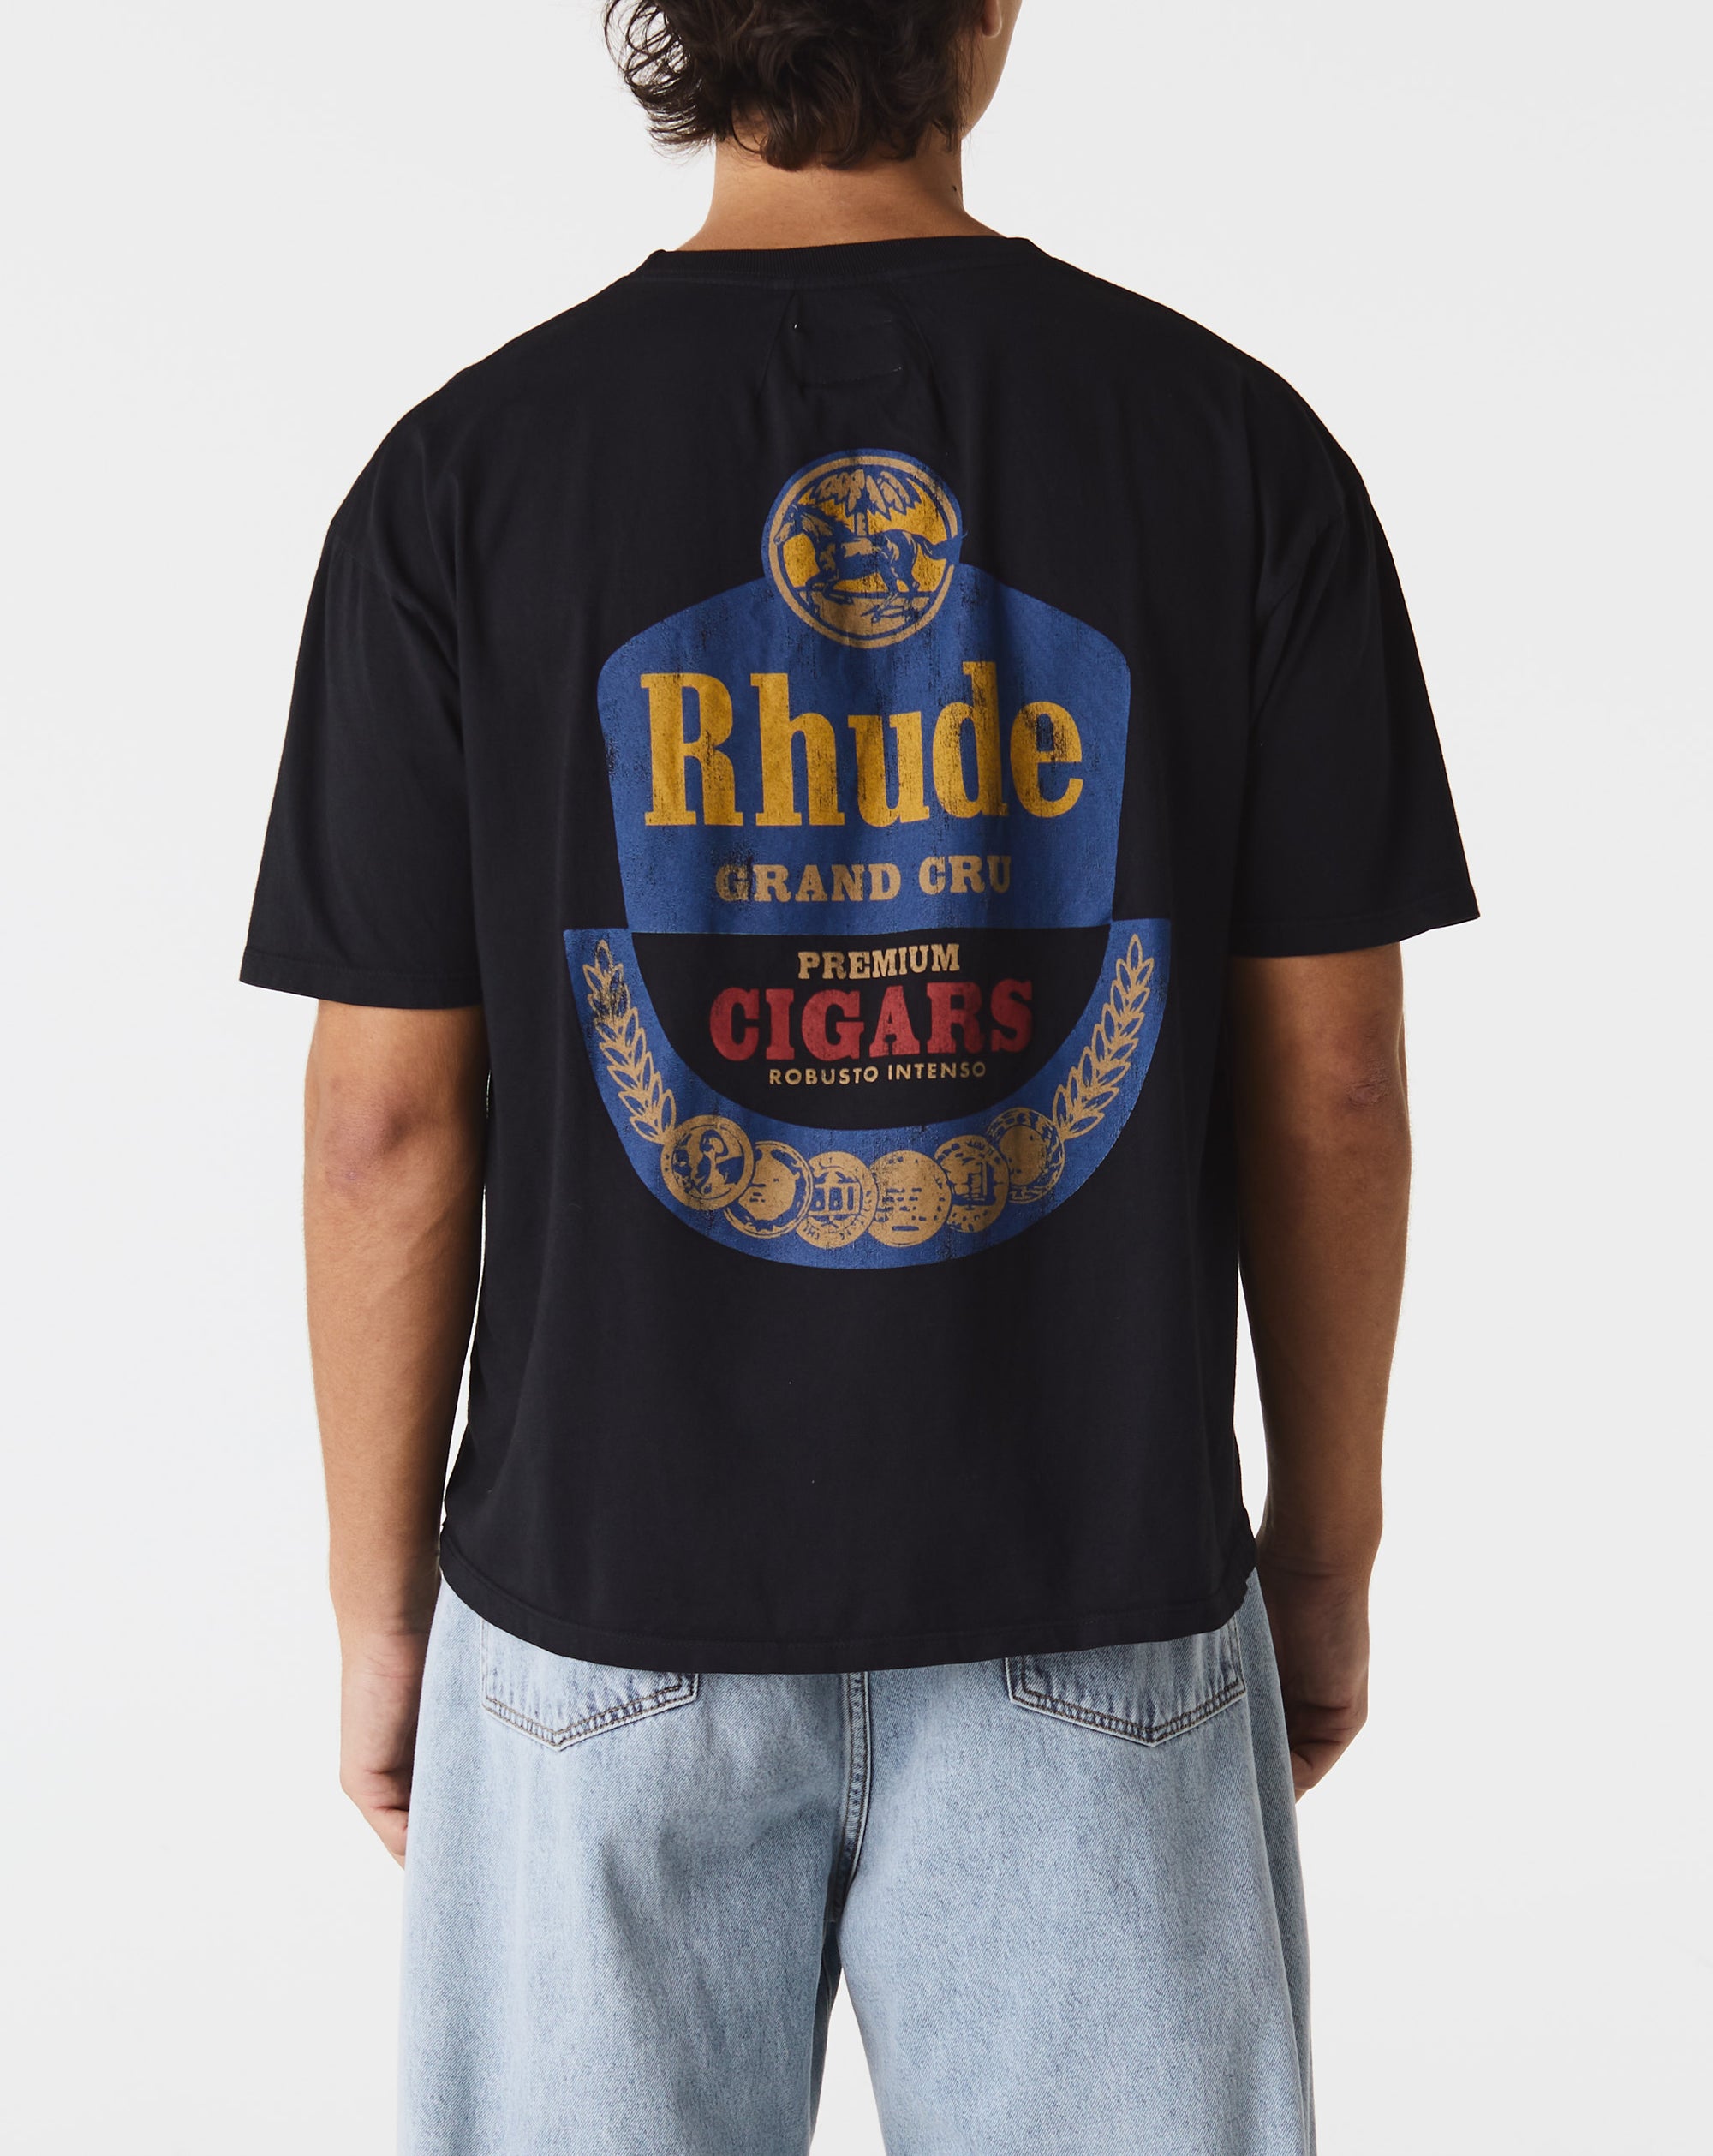 Rhude Grand Cru T-Shirt - Rule of Next Apparel